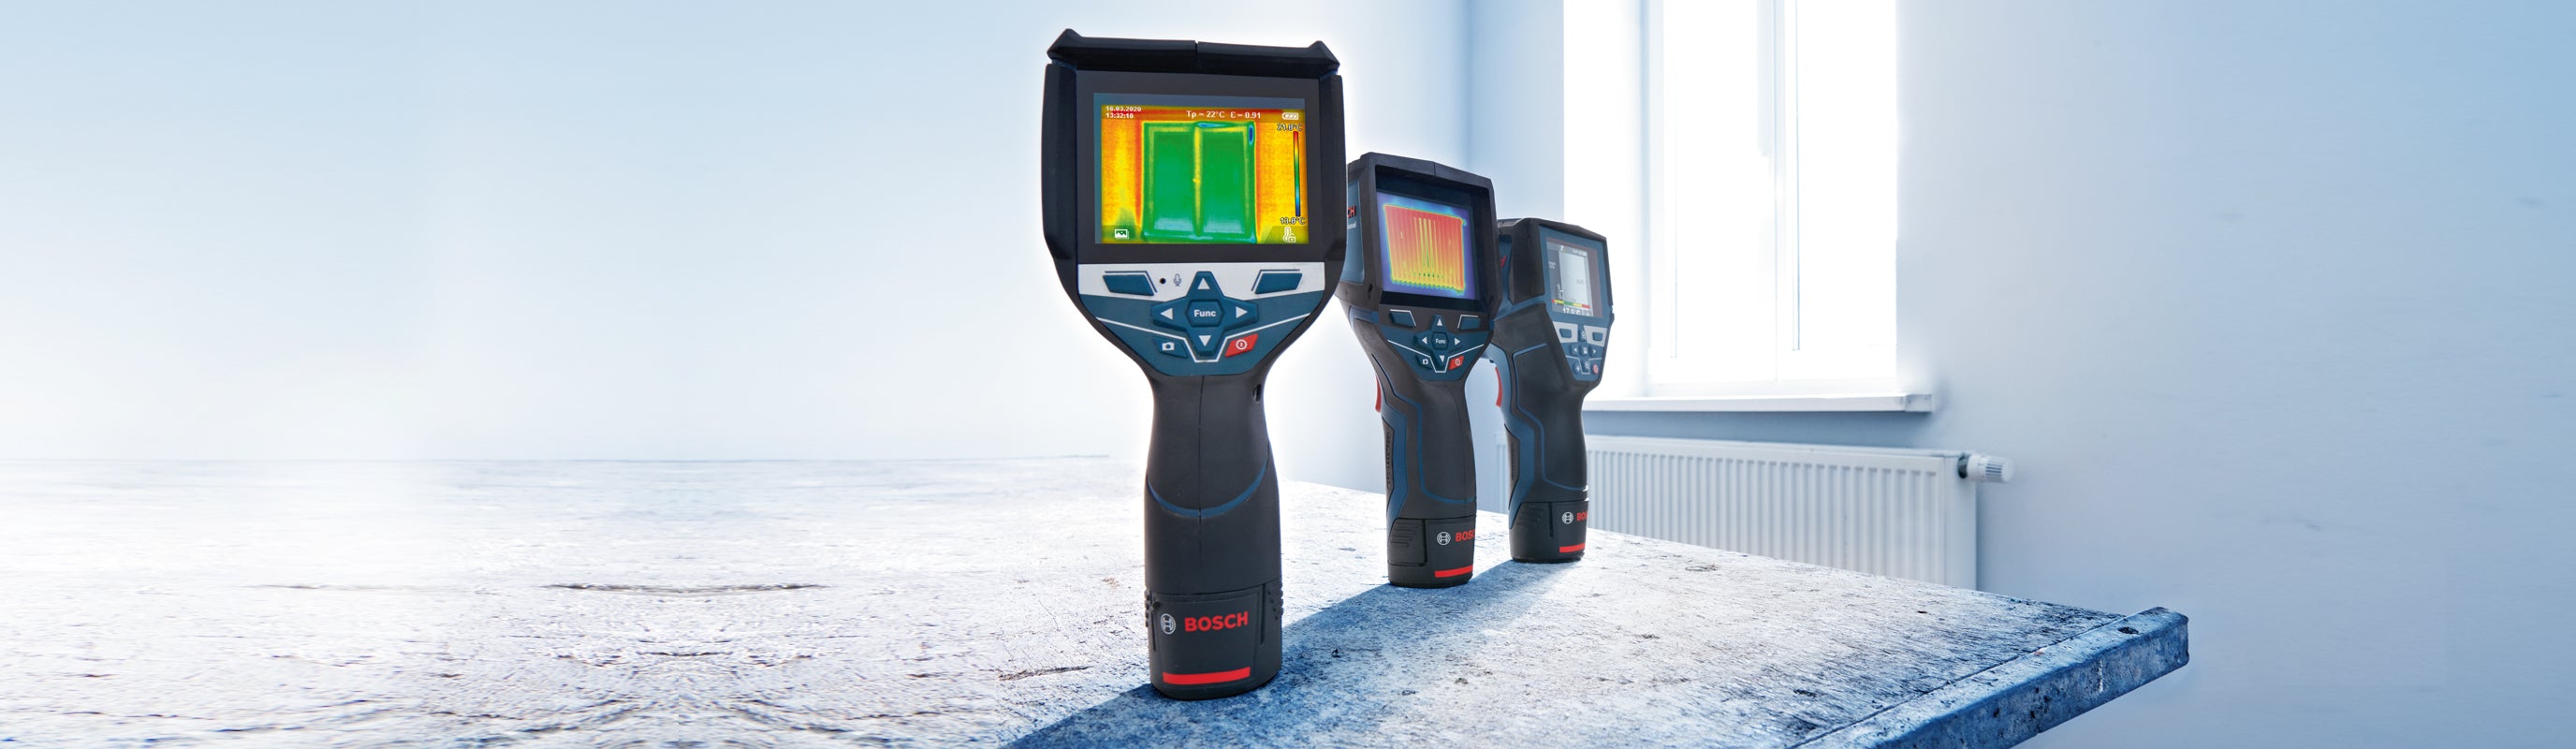 Termokamery a termodetektory